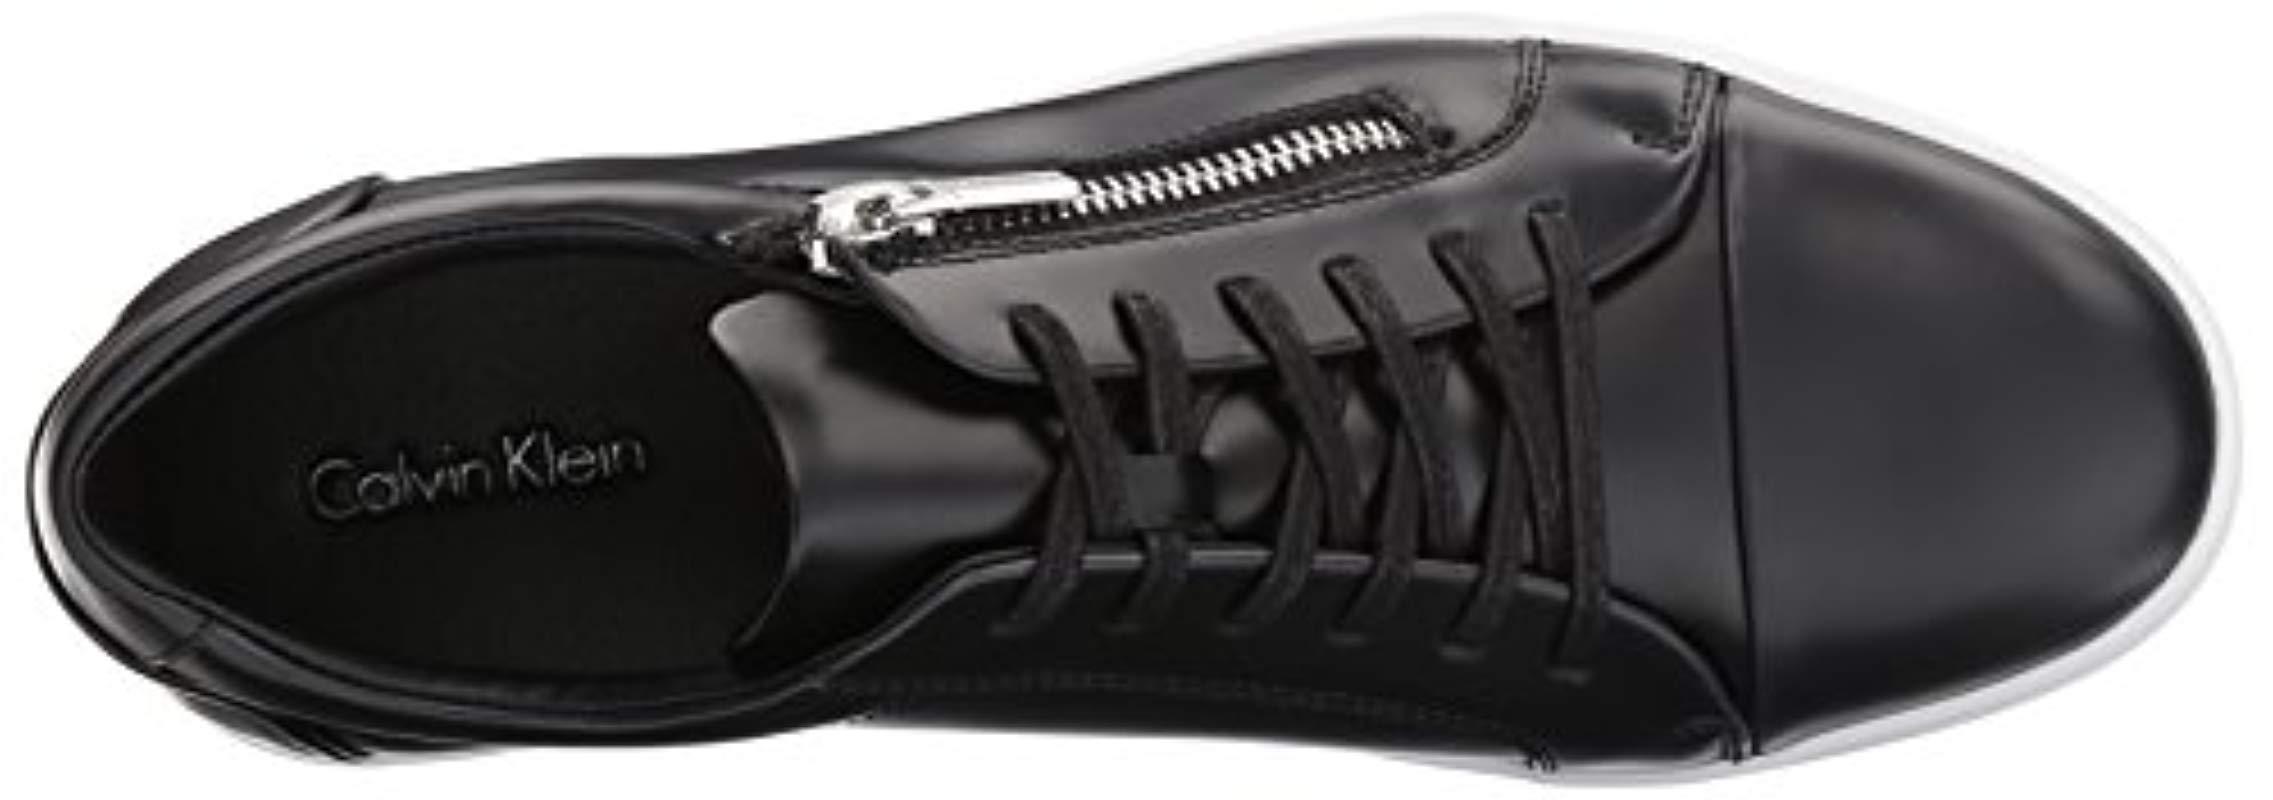 Calvin Klein Ibrahim Box Leather in Black for Men - Lyst